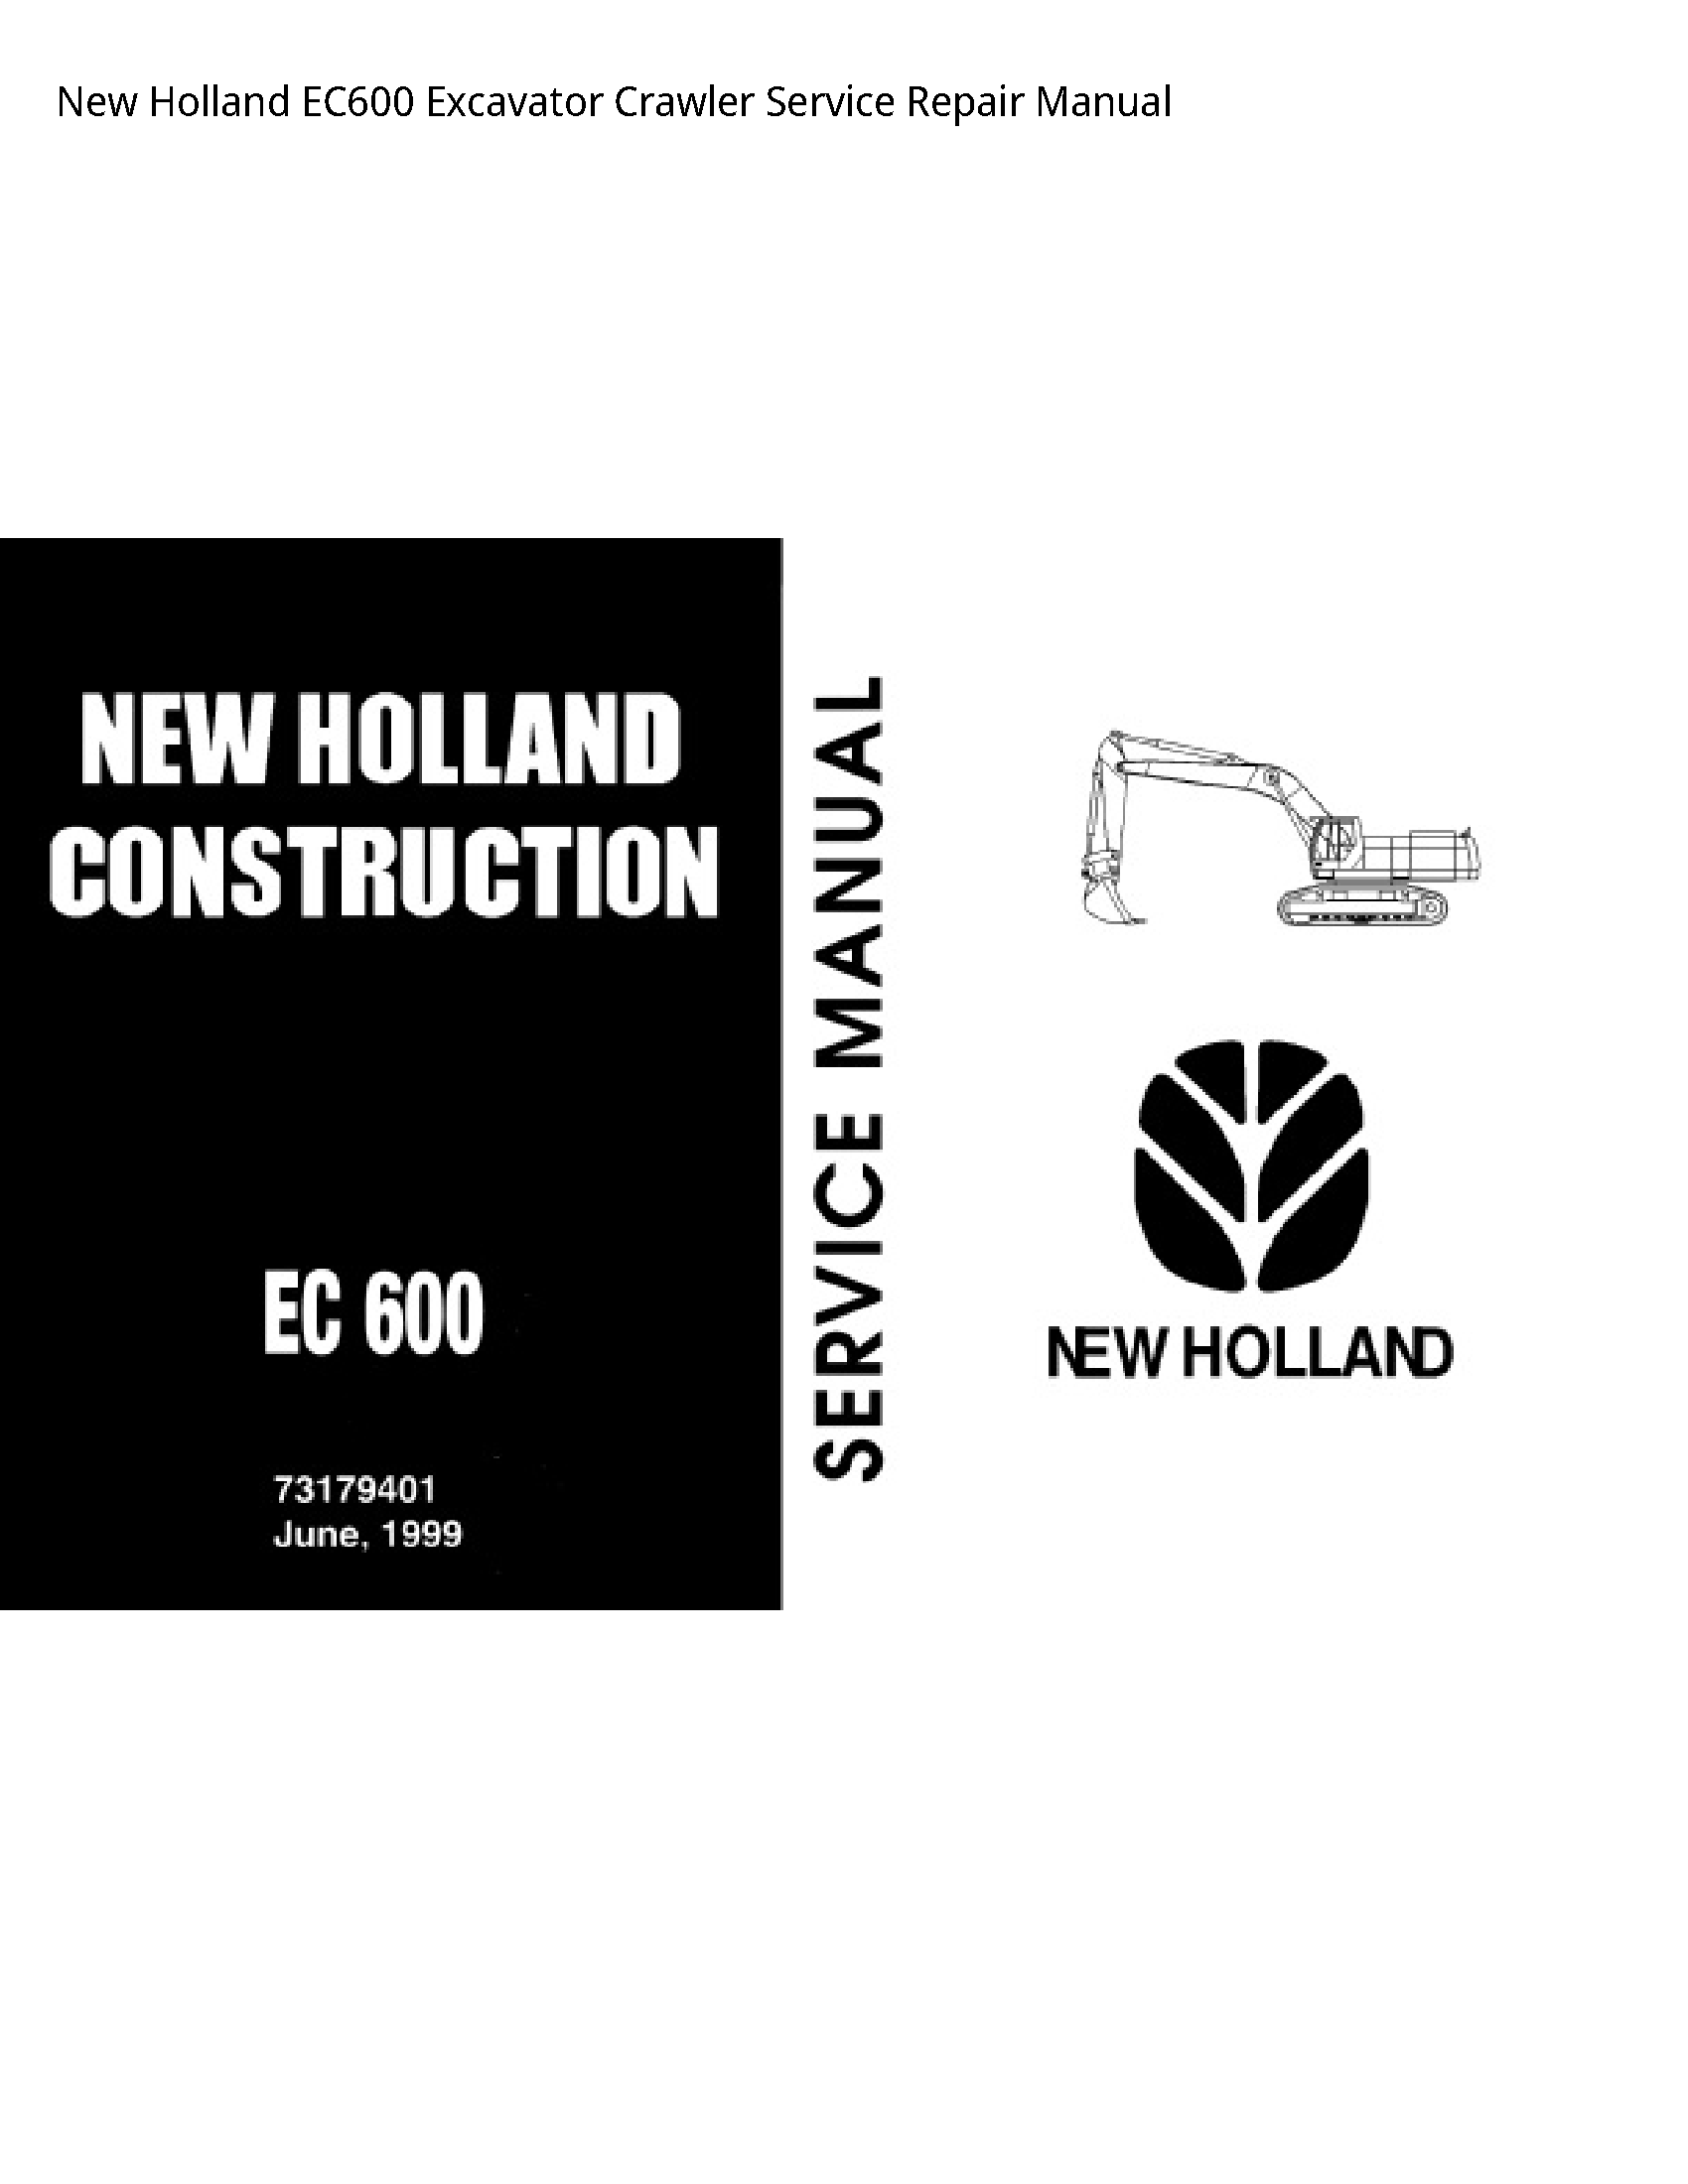 New Holland EC600 Excavator Crawler manual